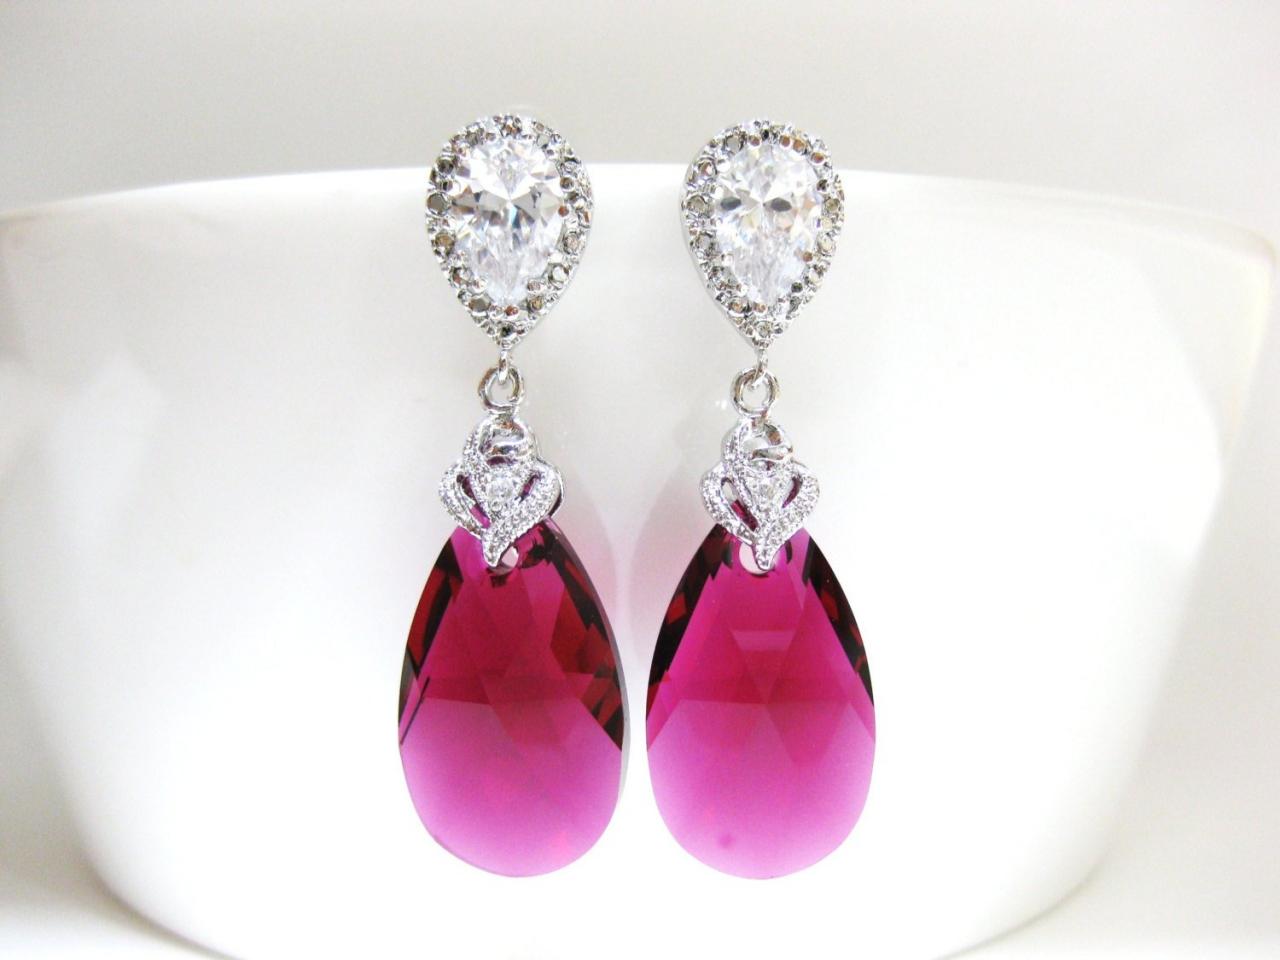 Bridal Ruby Earrings Swarovski Fuchsia Teardrop Earrings Pink Earrings Cubic Zirconia Earrings Wedding Jewelry Bridesmaids Gift (e038)